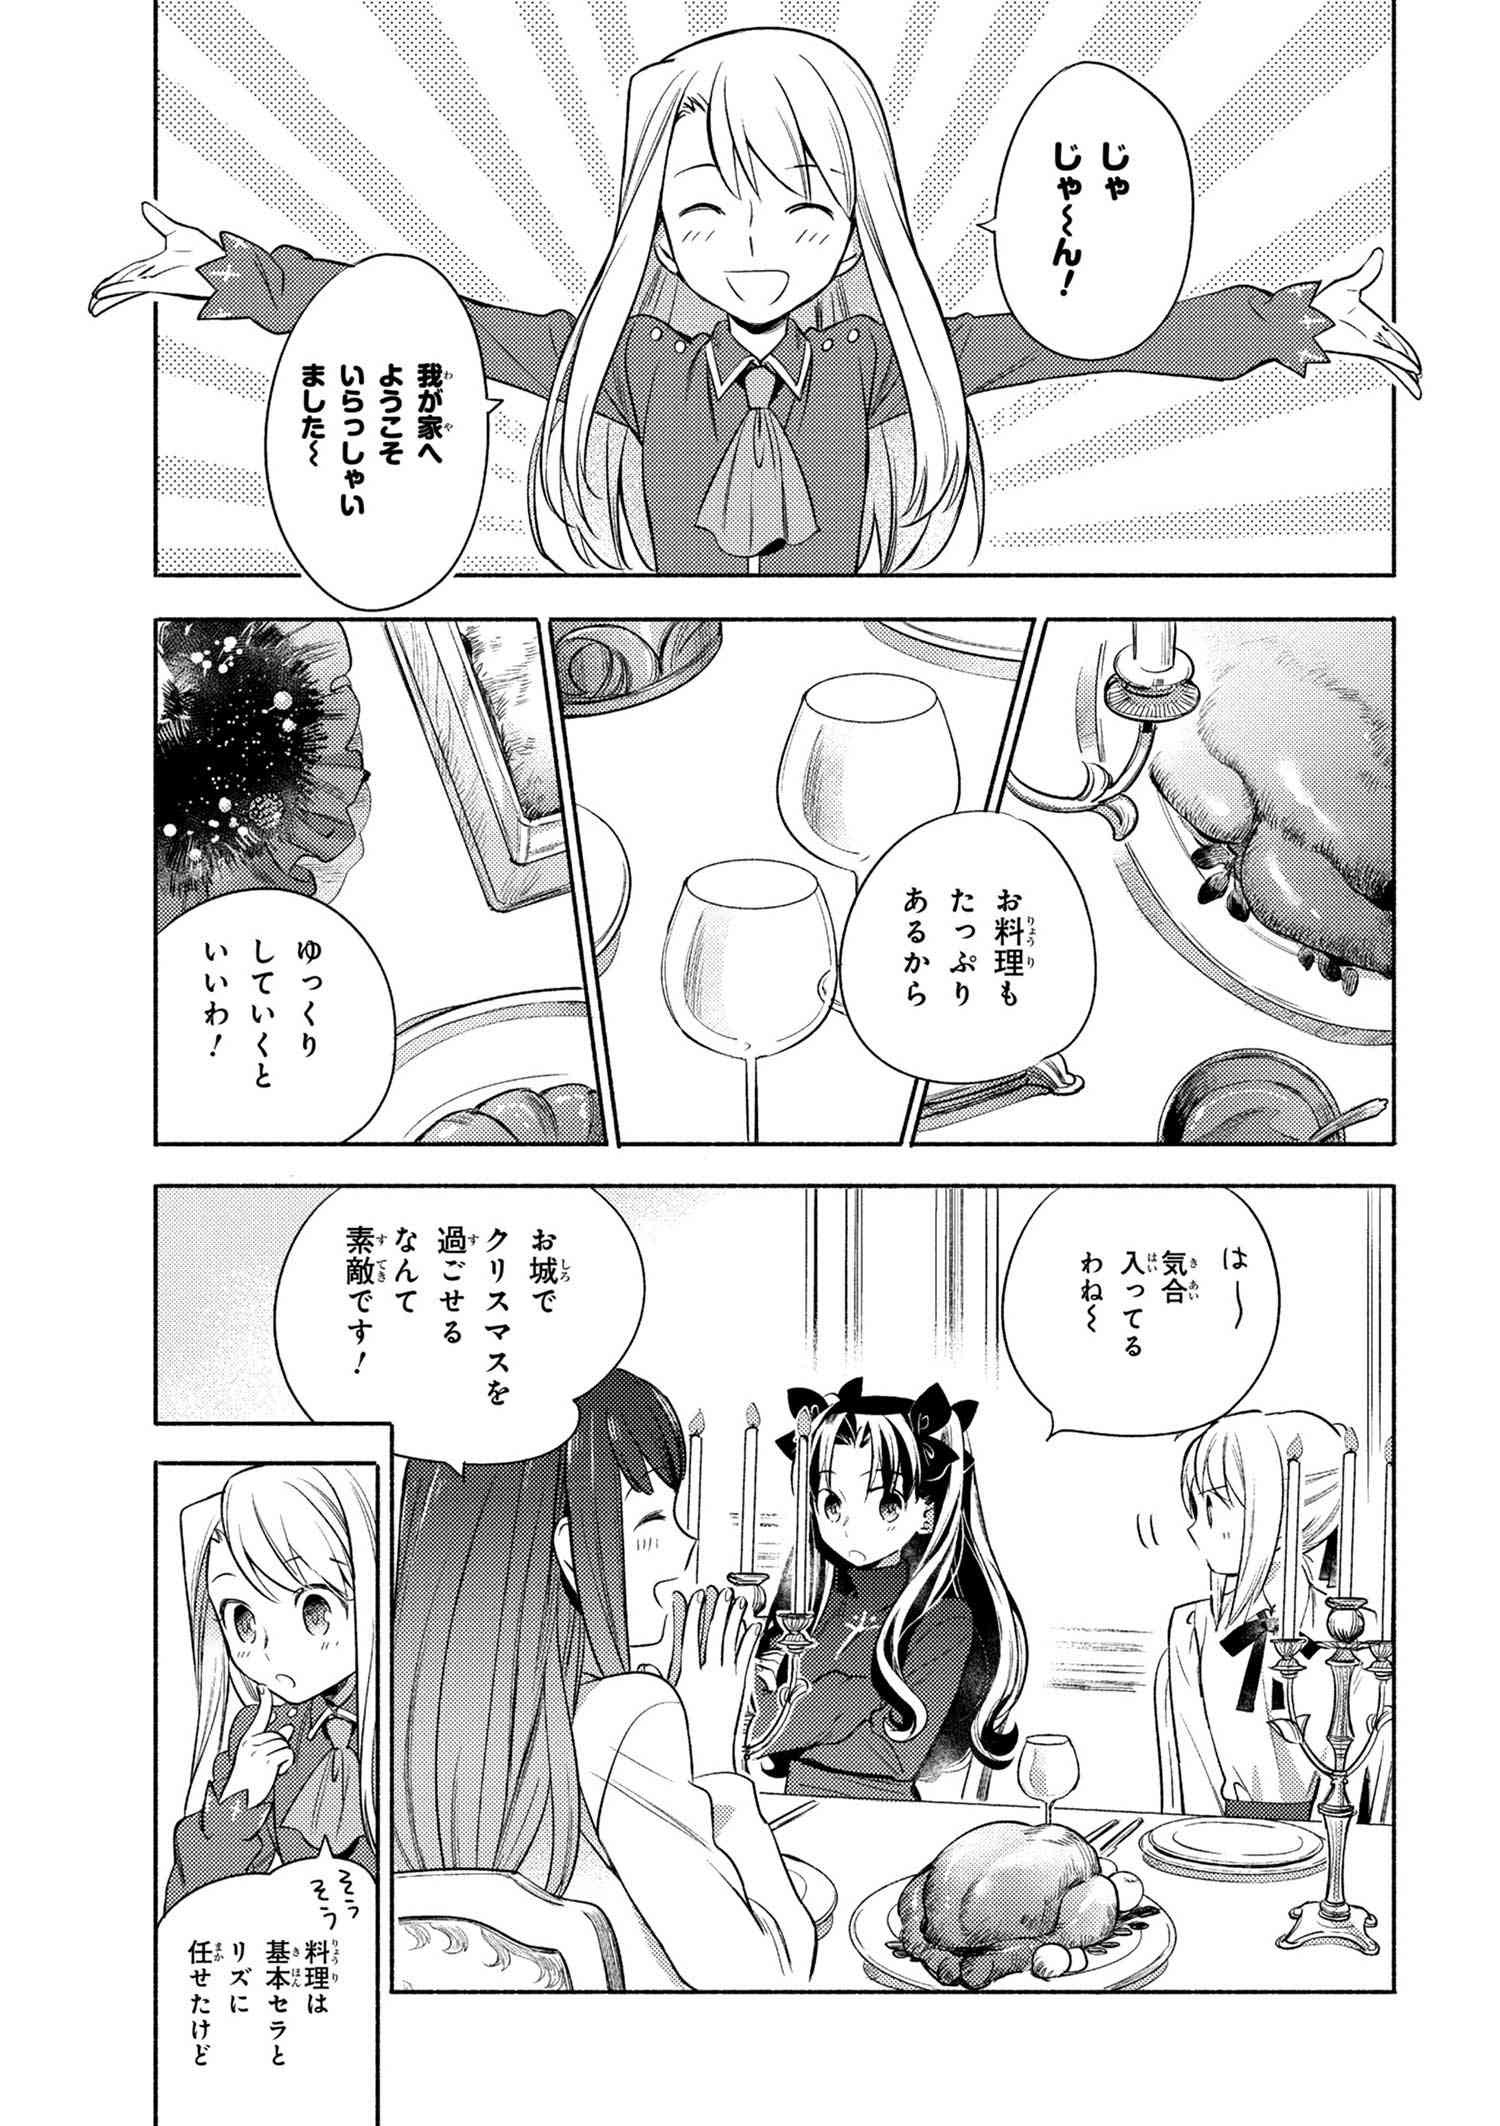 Emiya-san Chi no Kyou no Gohan - Chapter 11 - Page 3